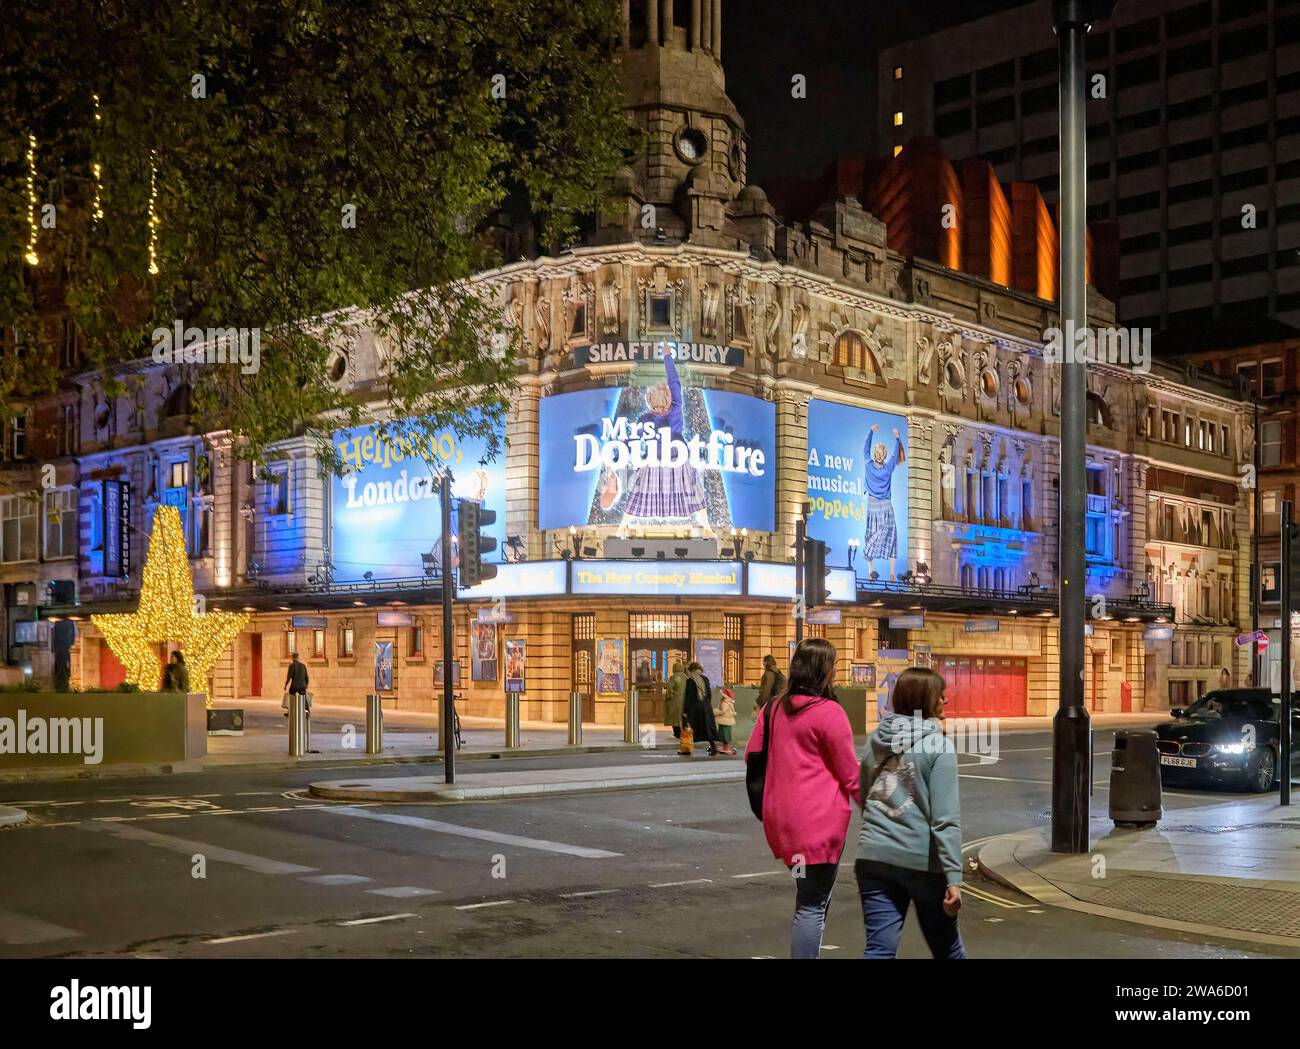 Teatro Shaftsbury, Shaftsbury Avenue, Mrs Doubtfire Production, Soho, scena notturna, centro di Londra, Regno Unito Foto Stock